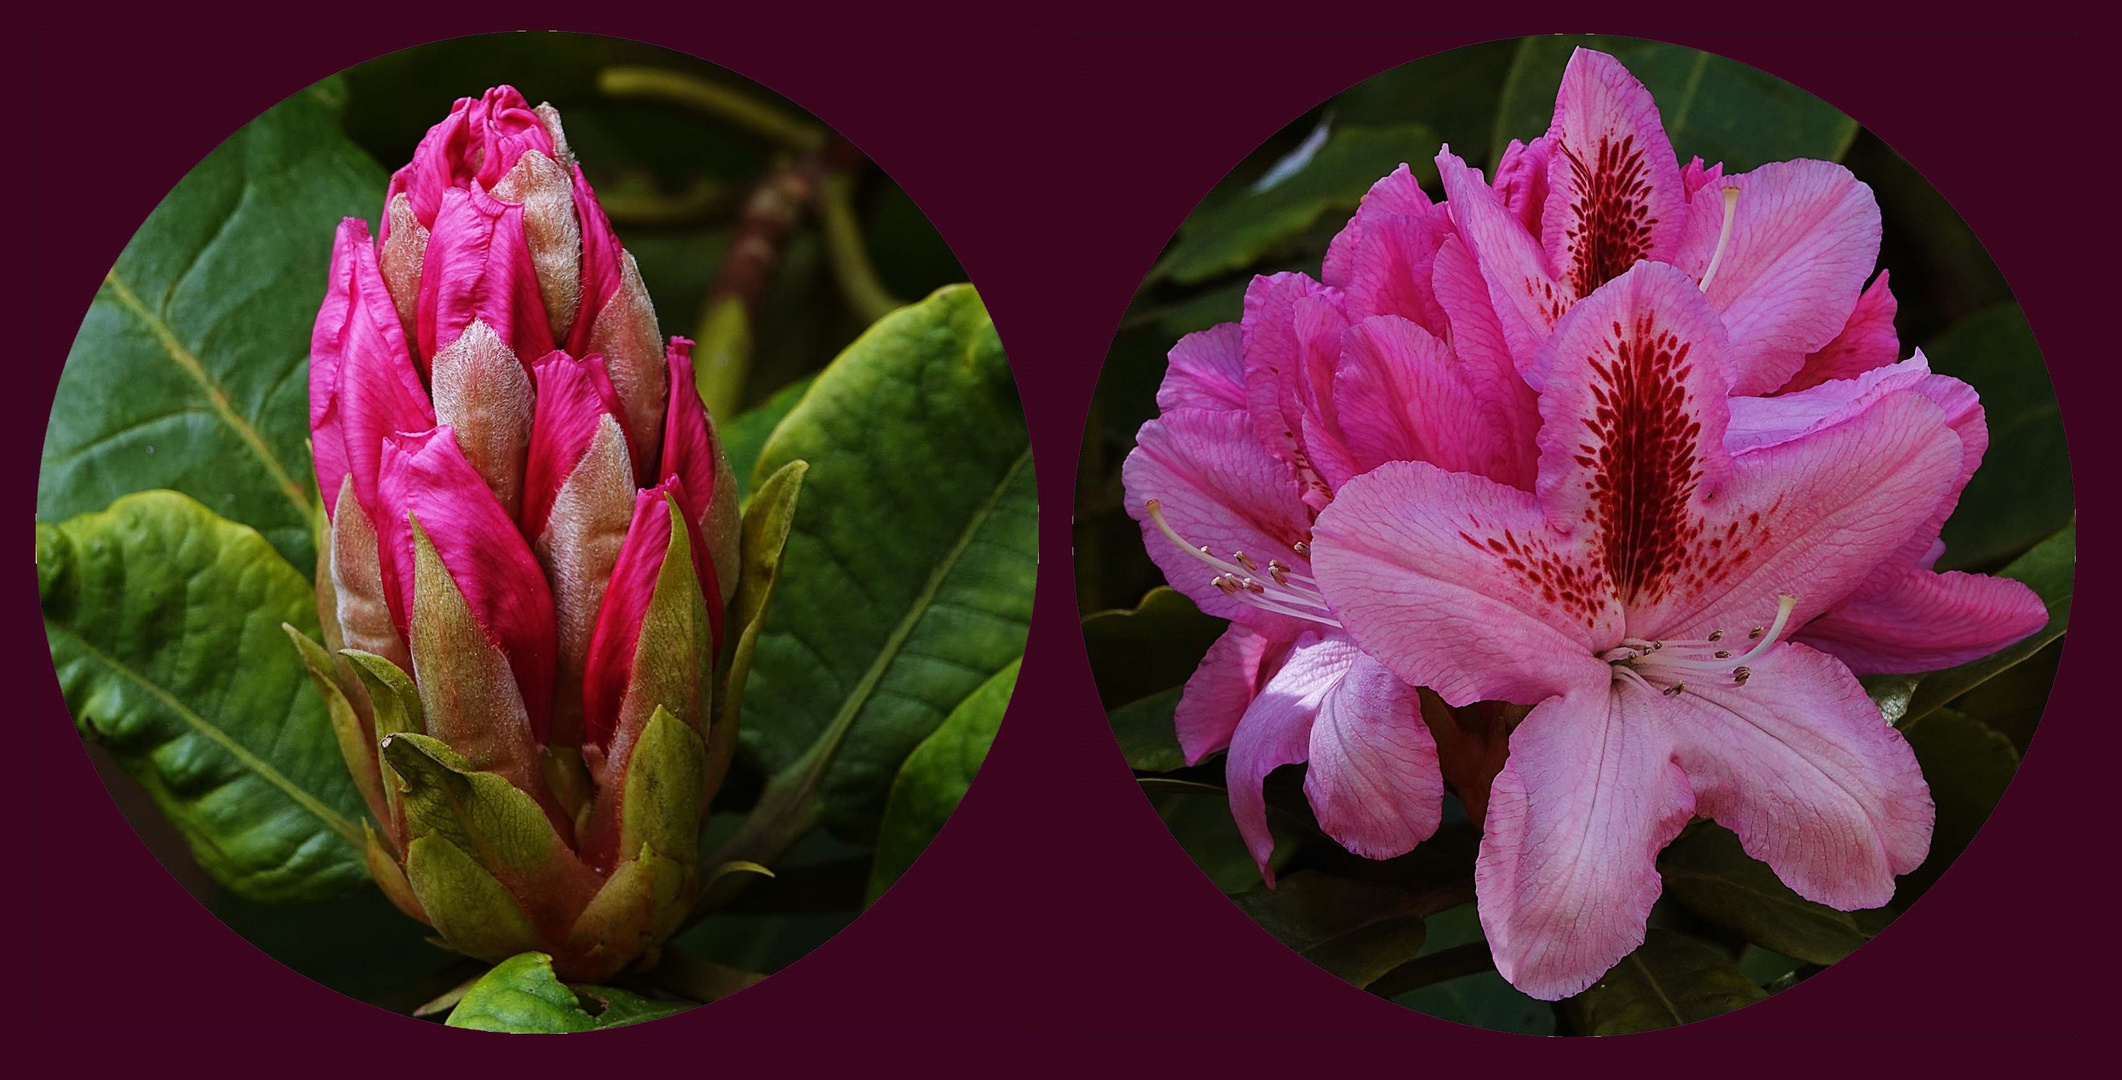 Rhododendron öffne dich